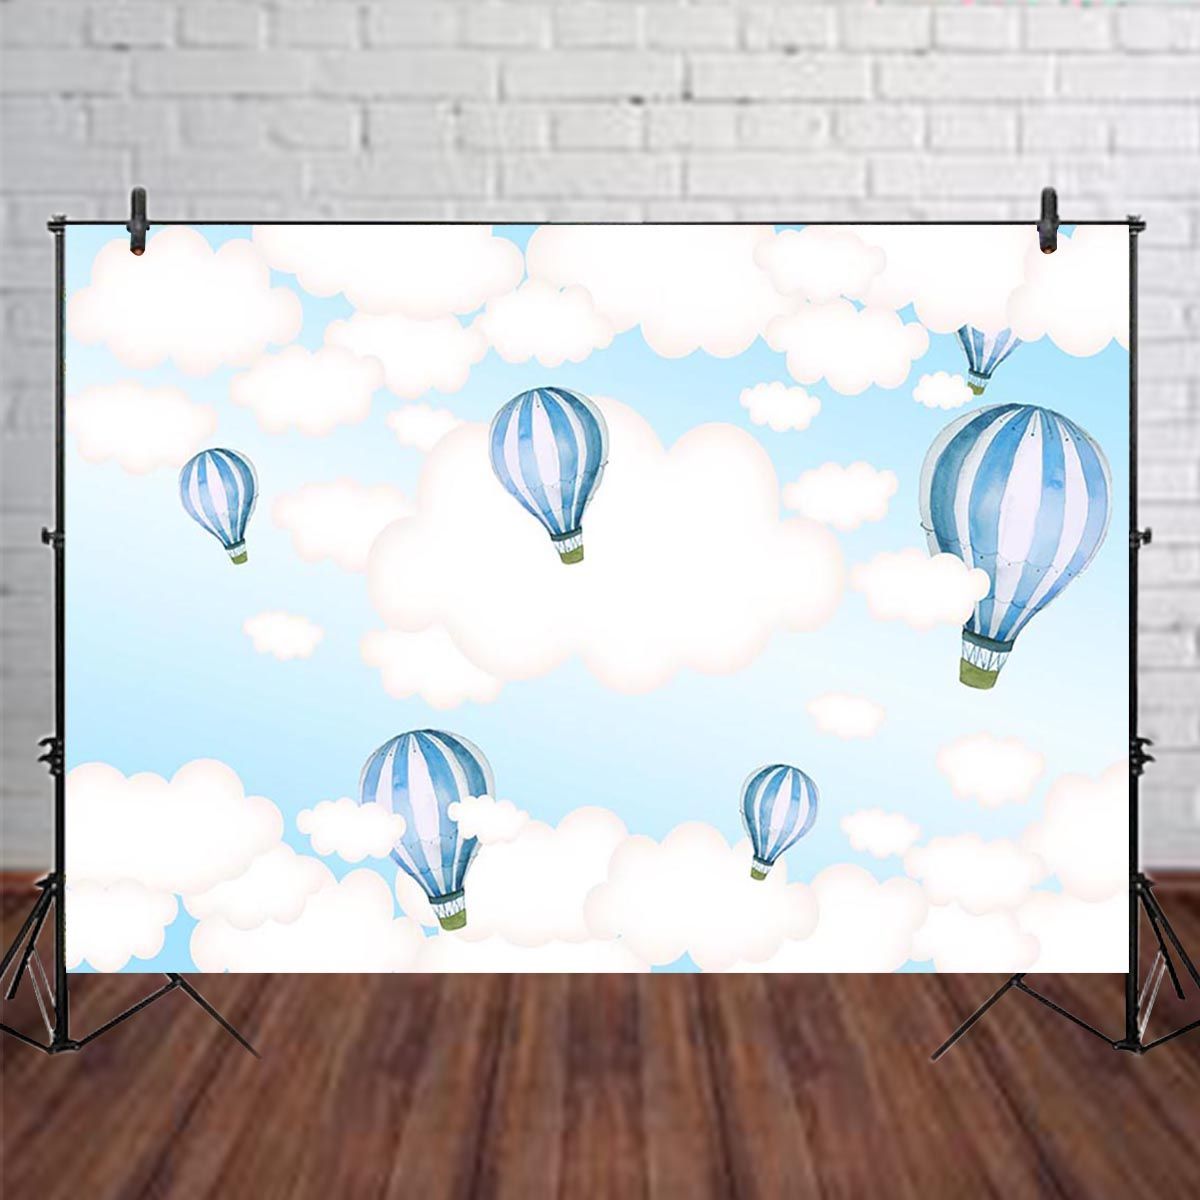 5x3FT-7x5FT-9x6FT-Sky-White-Cloud-Balloon-Photography-Backdrop-Background-Studio-Prop---09x15m-1618189